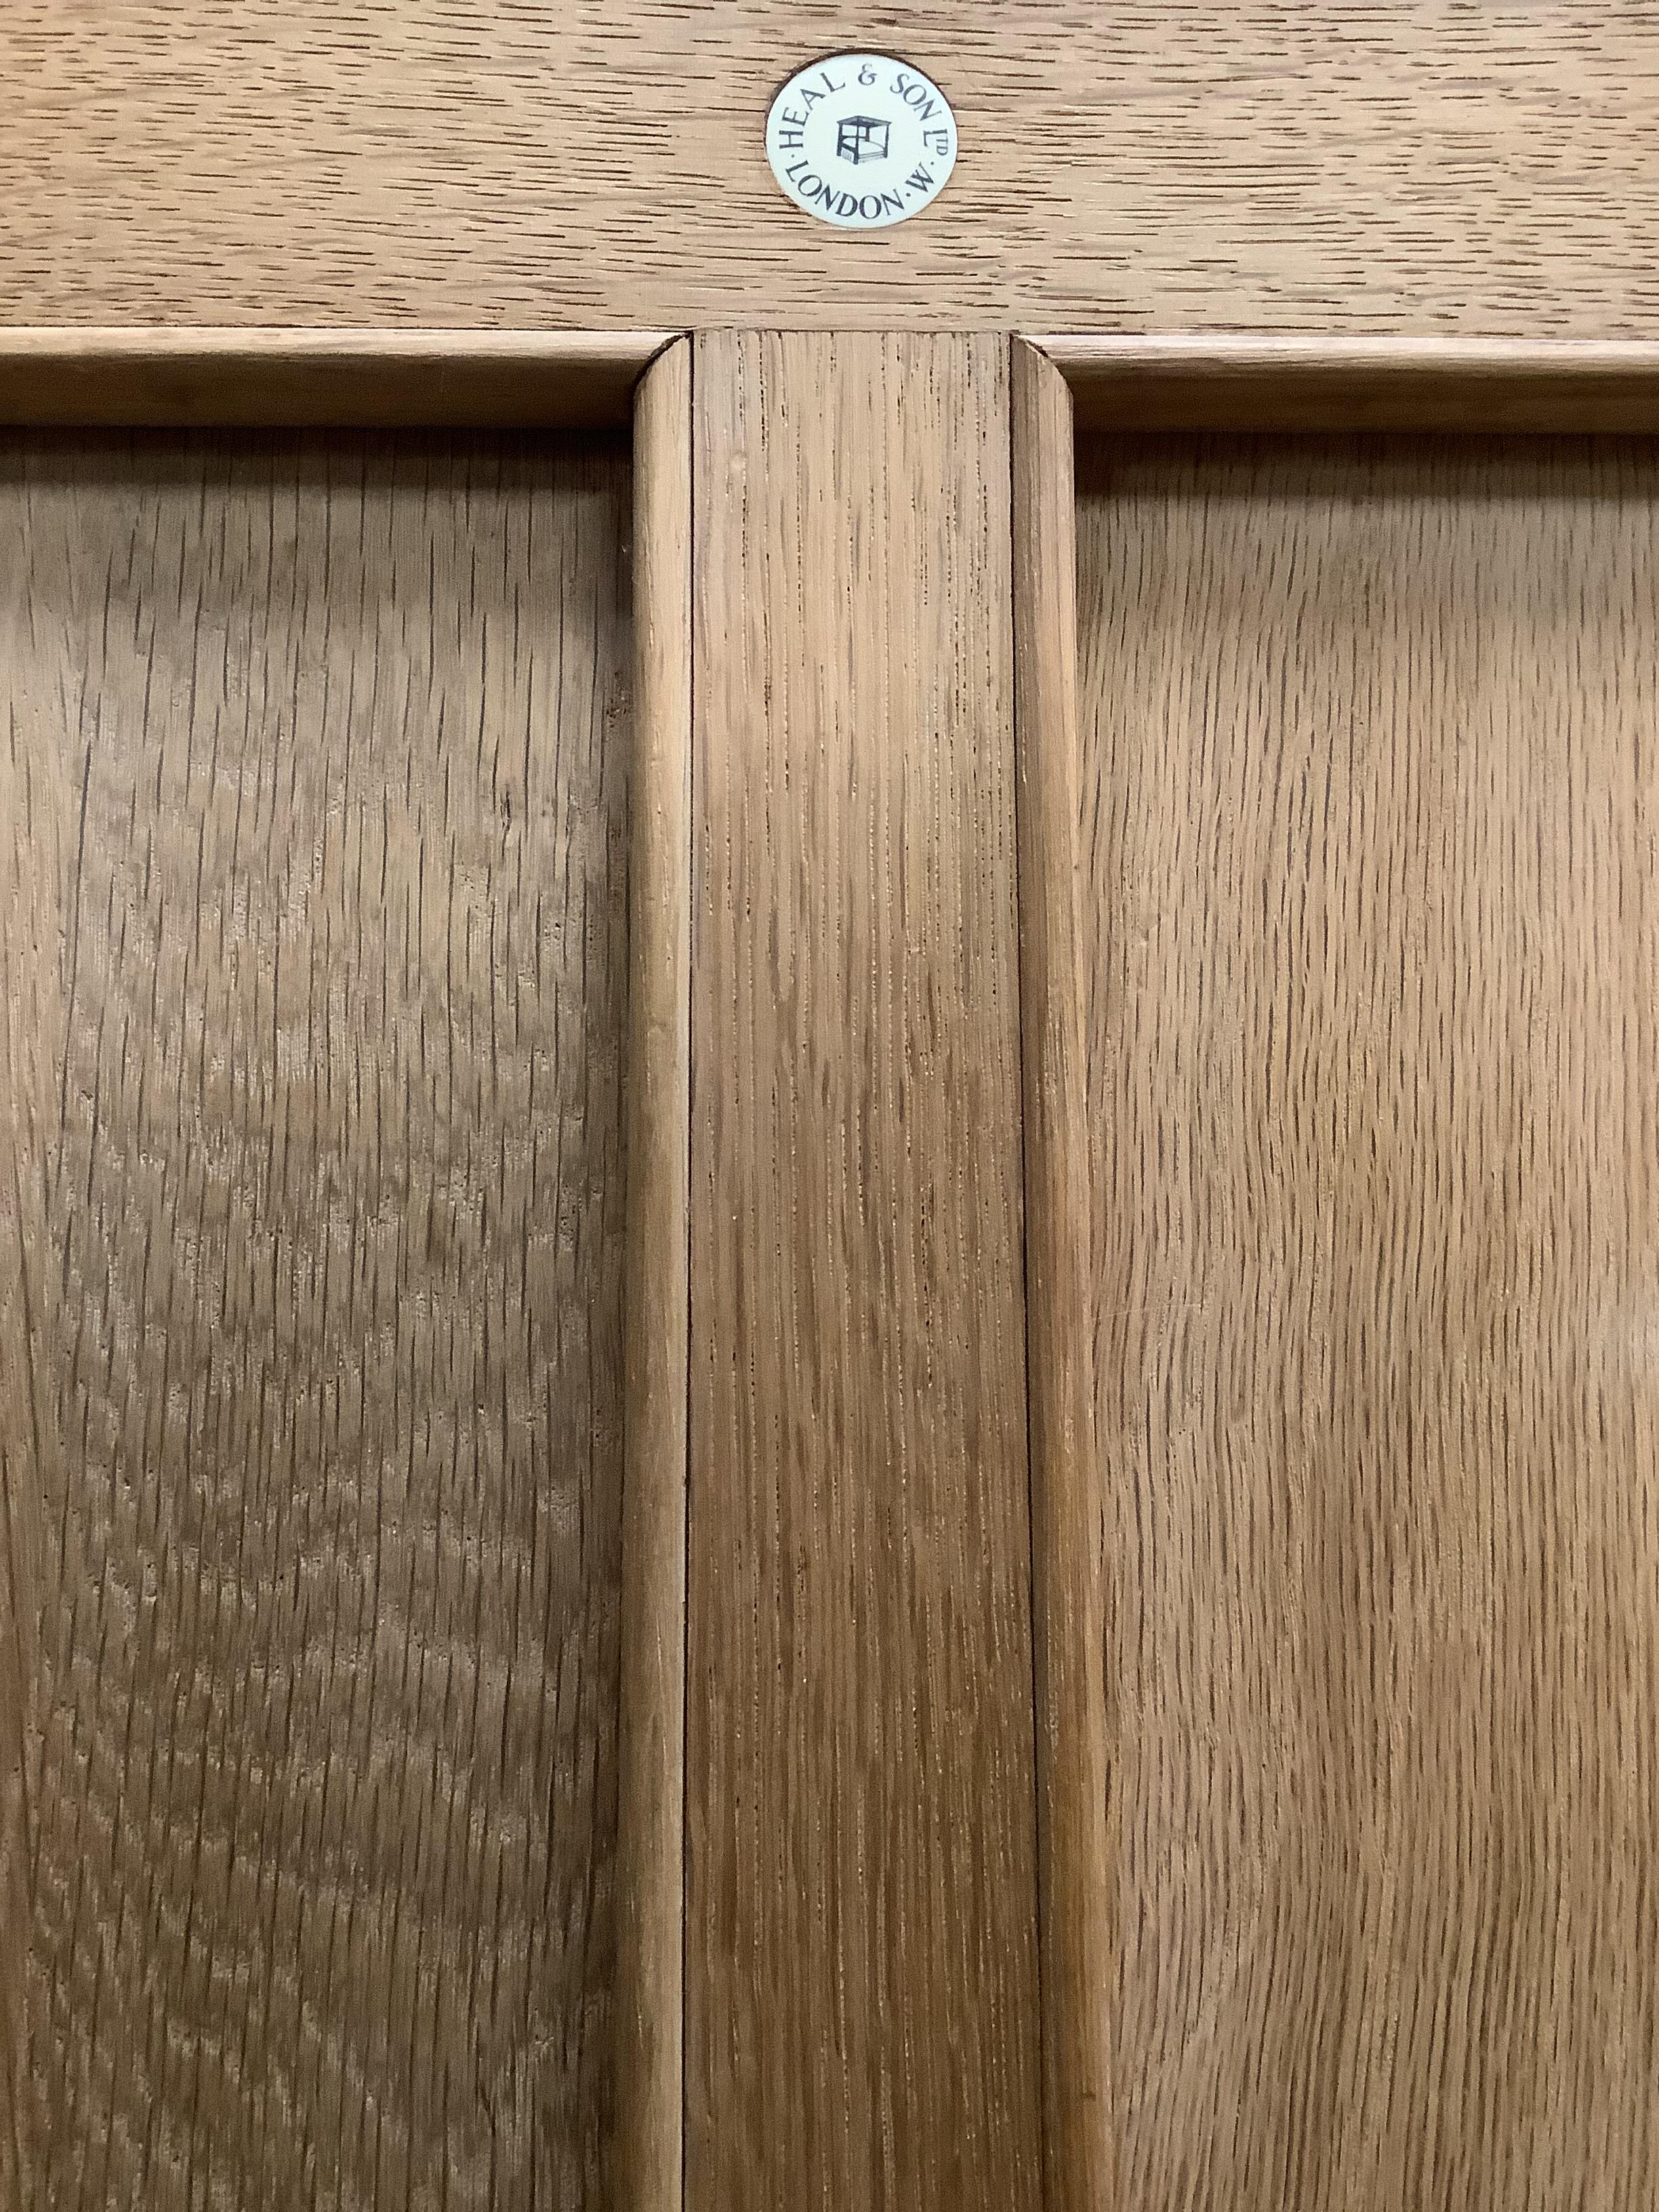 Heal & Son Ltd., London, a pair of bleached oak corner wardrobes, width 94cm, depth 53cm, height - Image 2 of 3